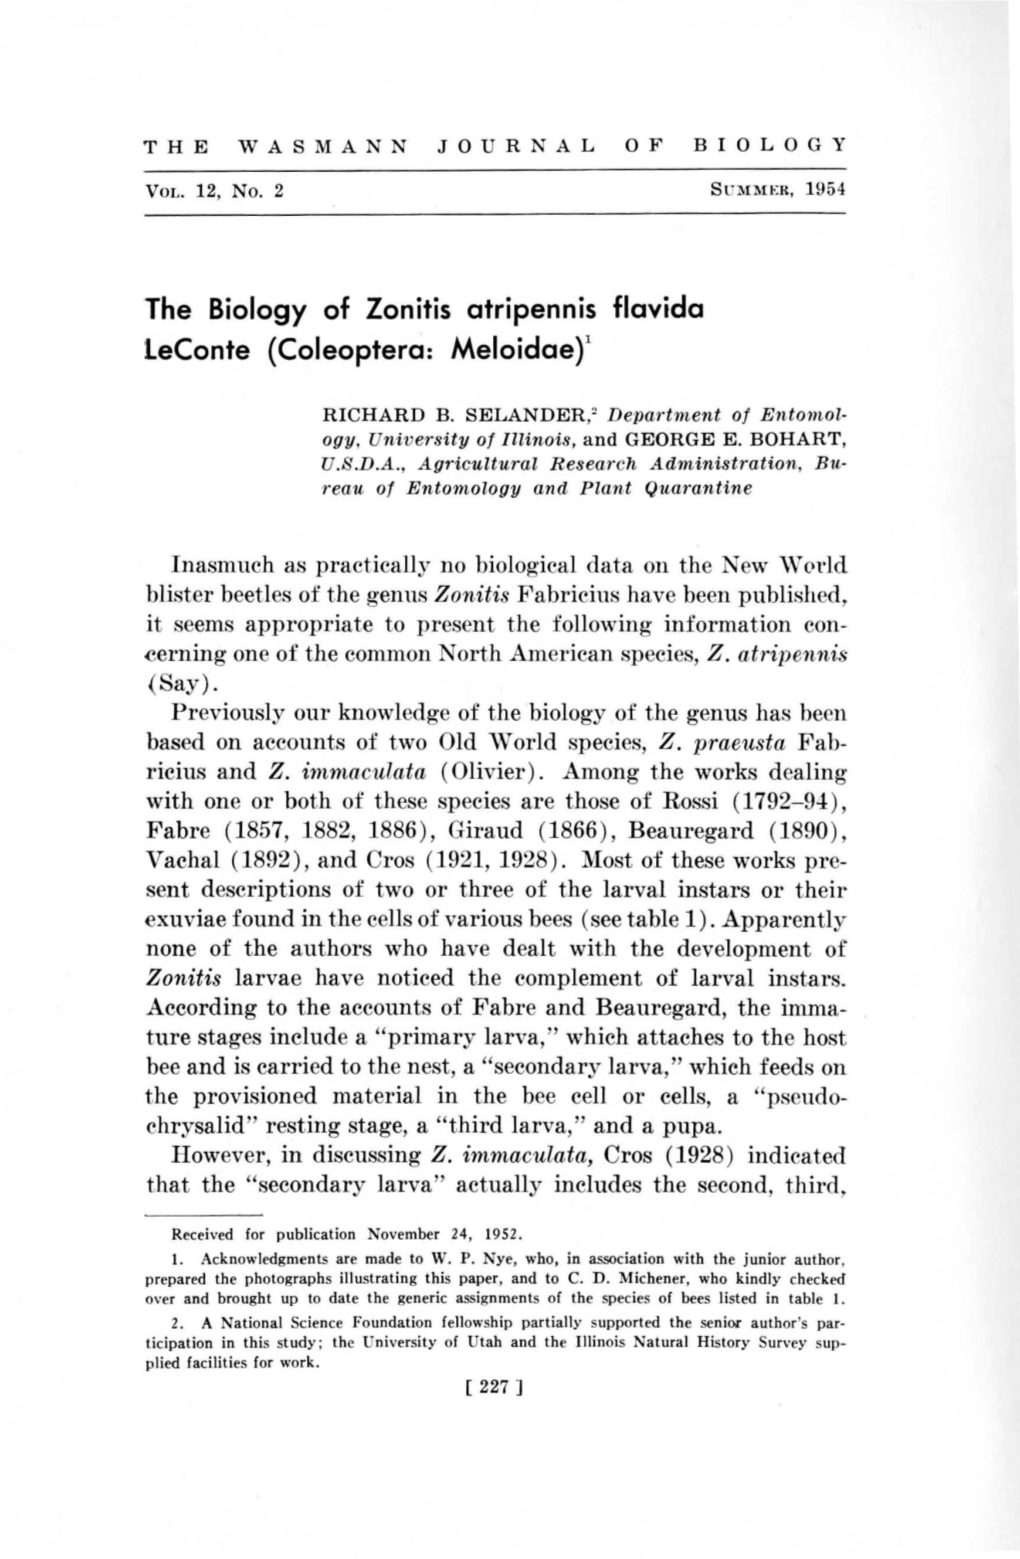 The Biology of Zonitis Atripennis Flavida Leconte (Coleoptera: Meloidae)'